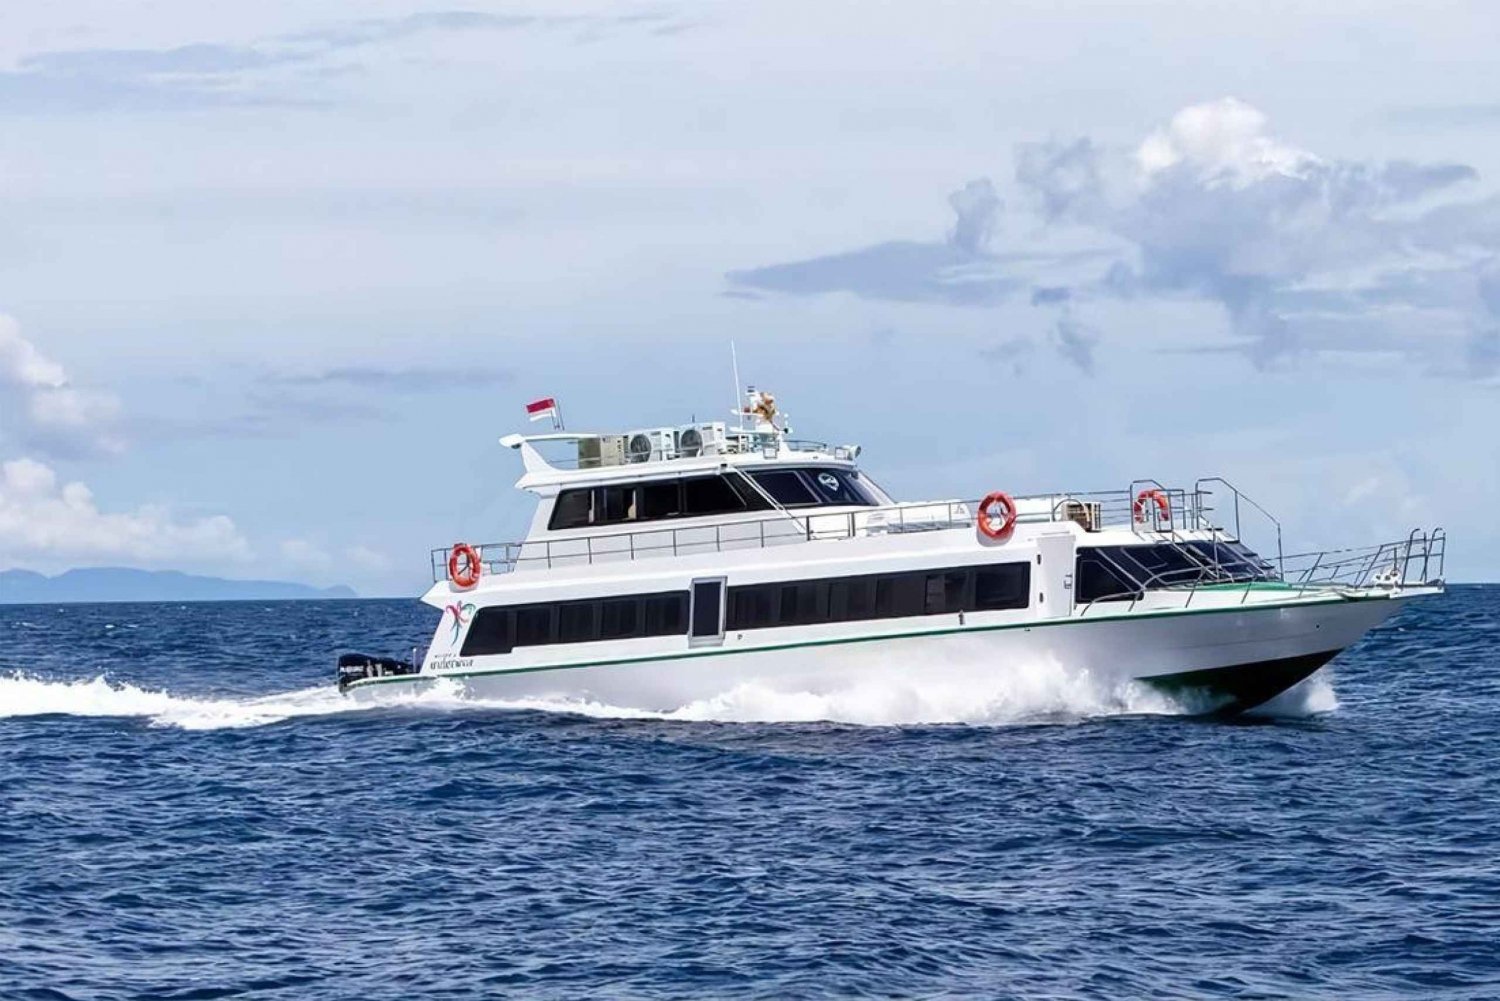 From Bali: 1-Way Speedboat Transfer to Lombok